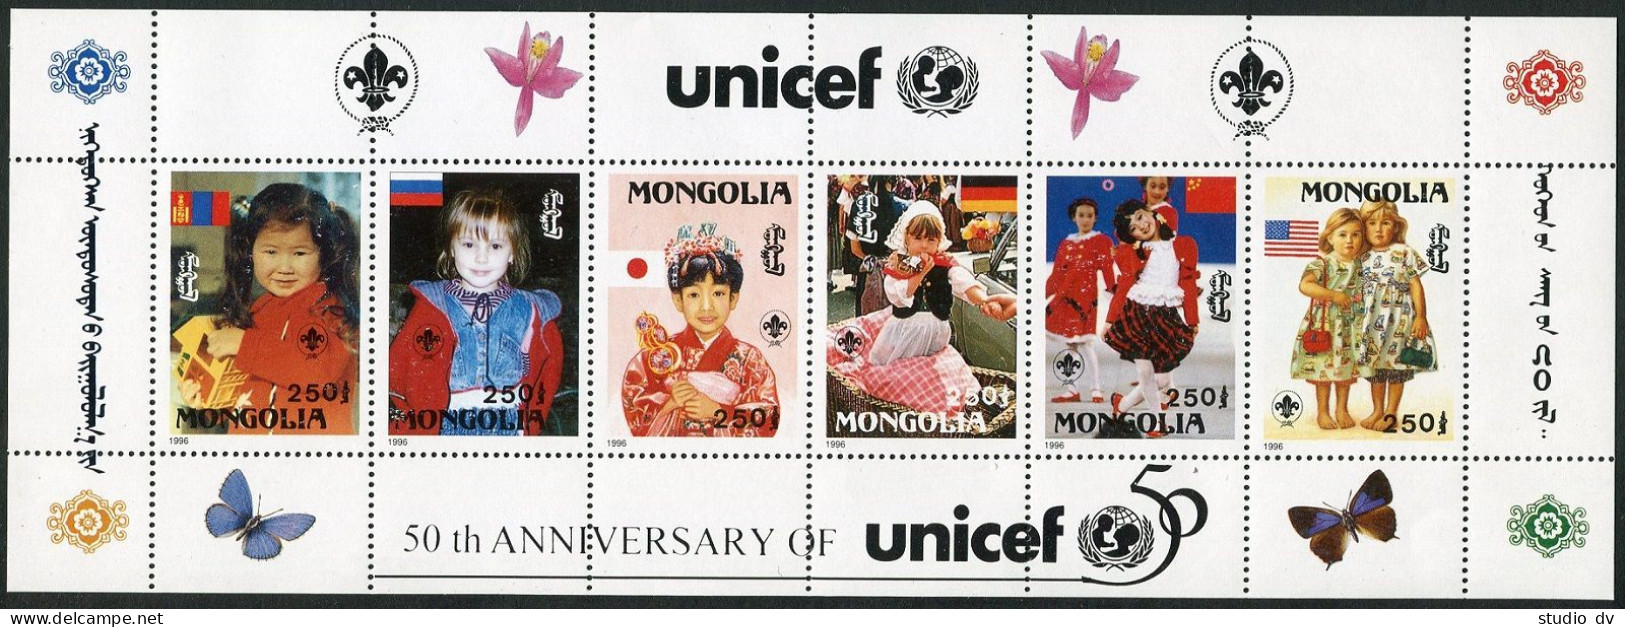 Mongolia 2247J-Oq Sheet,MNH. UNICEF 1996.Children,Scouting Emblem.Flags. - Mongolie